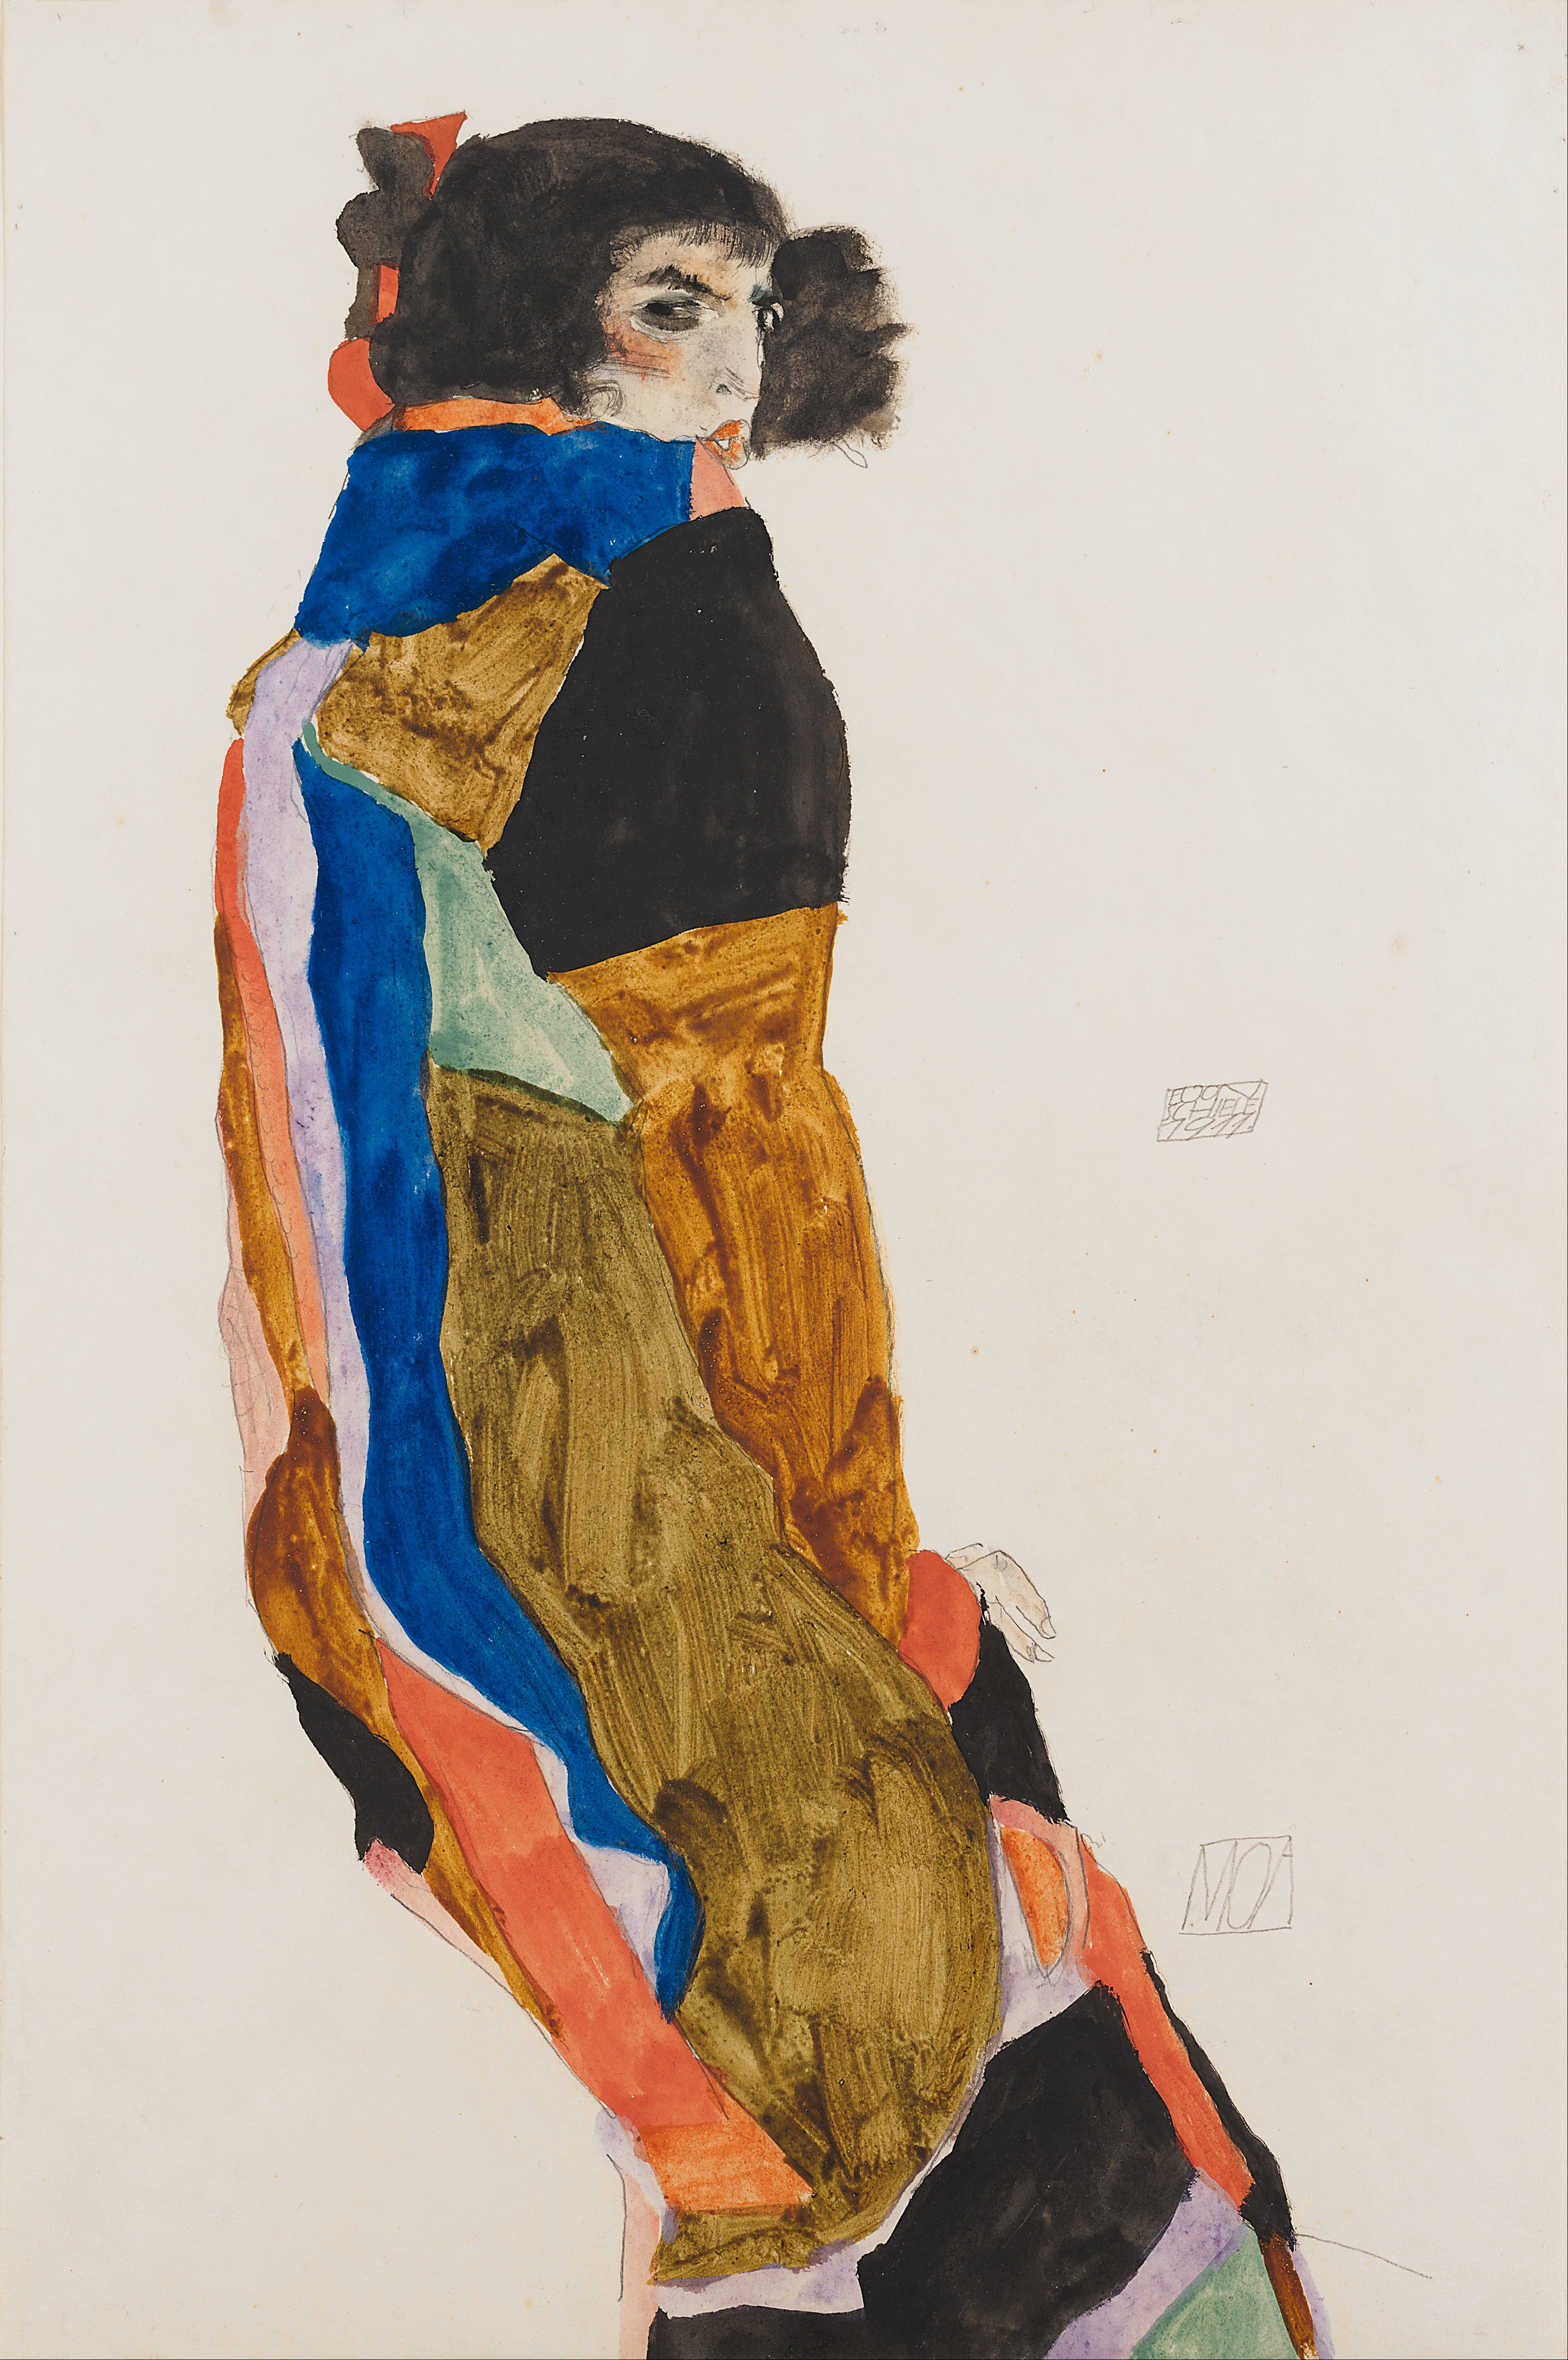 Моа by Egon Schiele - 1911 - 31.5 x 47.8 cm 